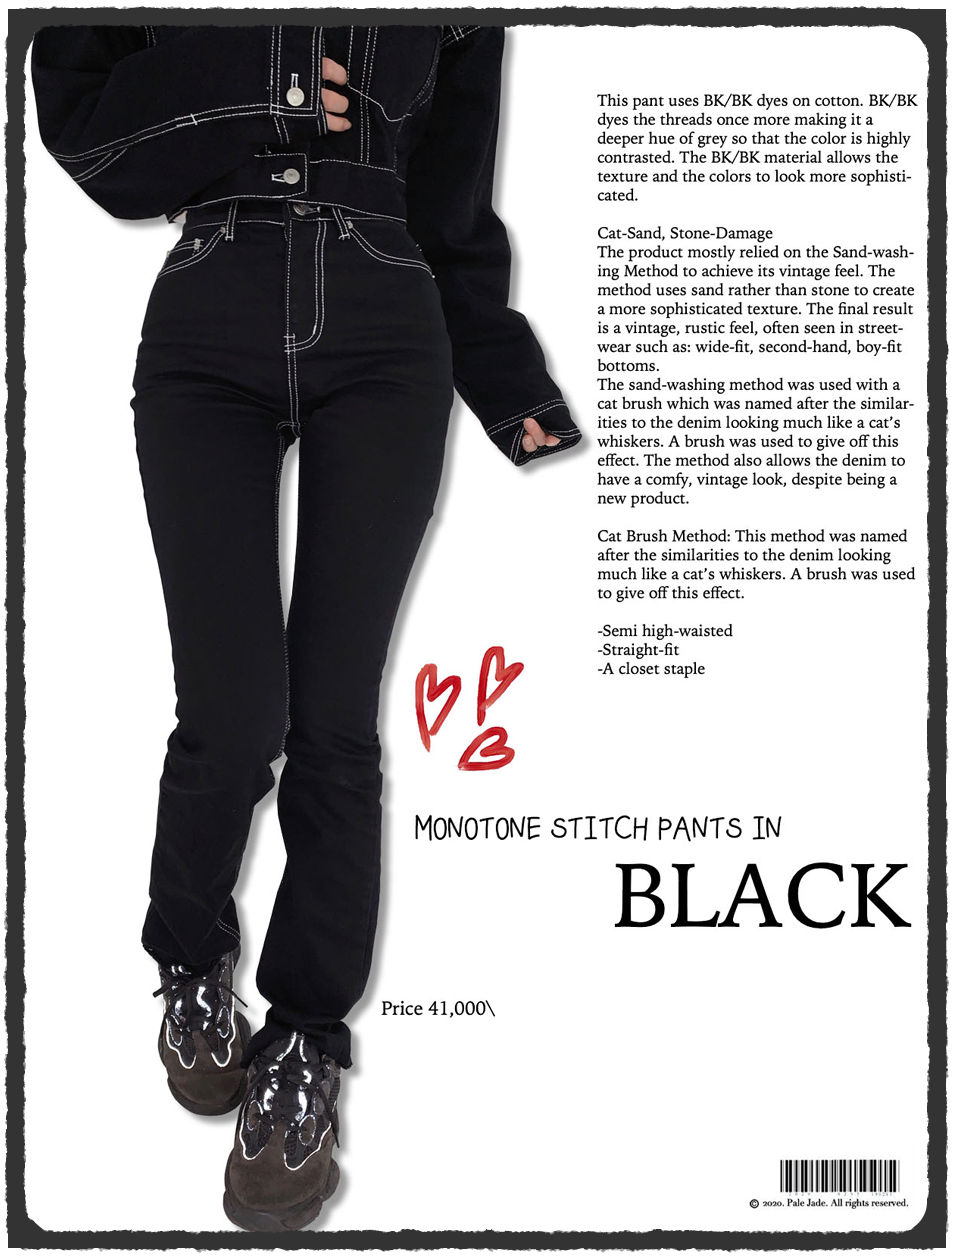 Monotone Stitch Pants In BLACK